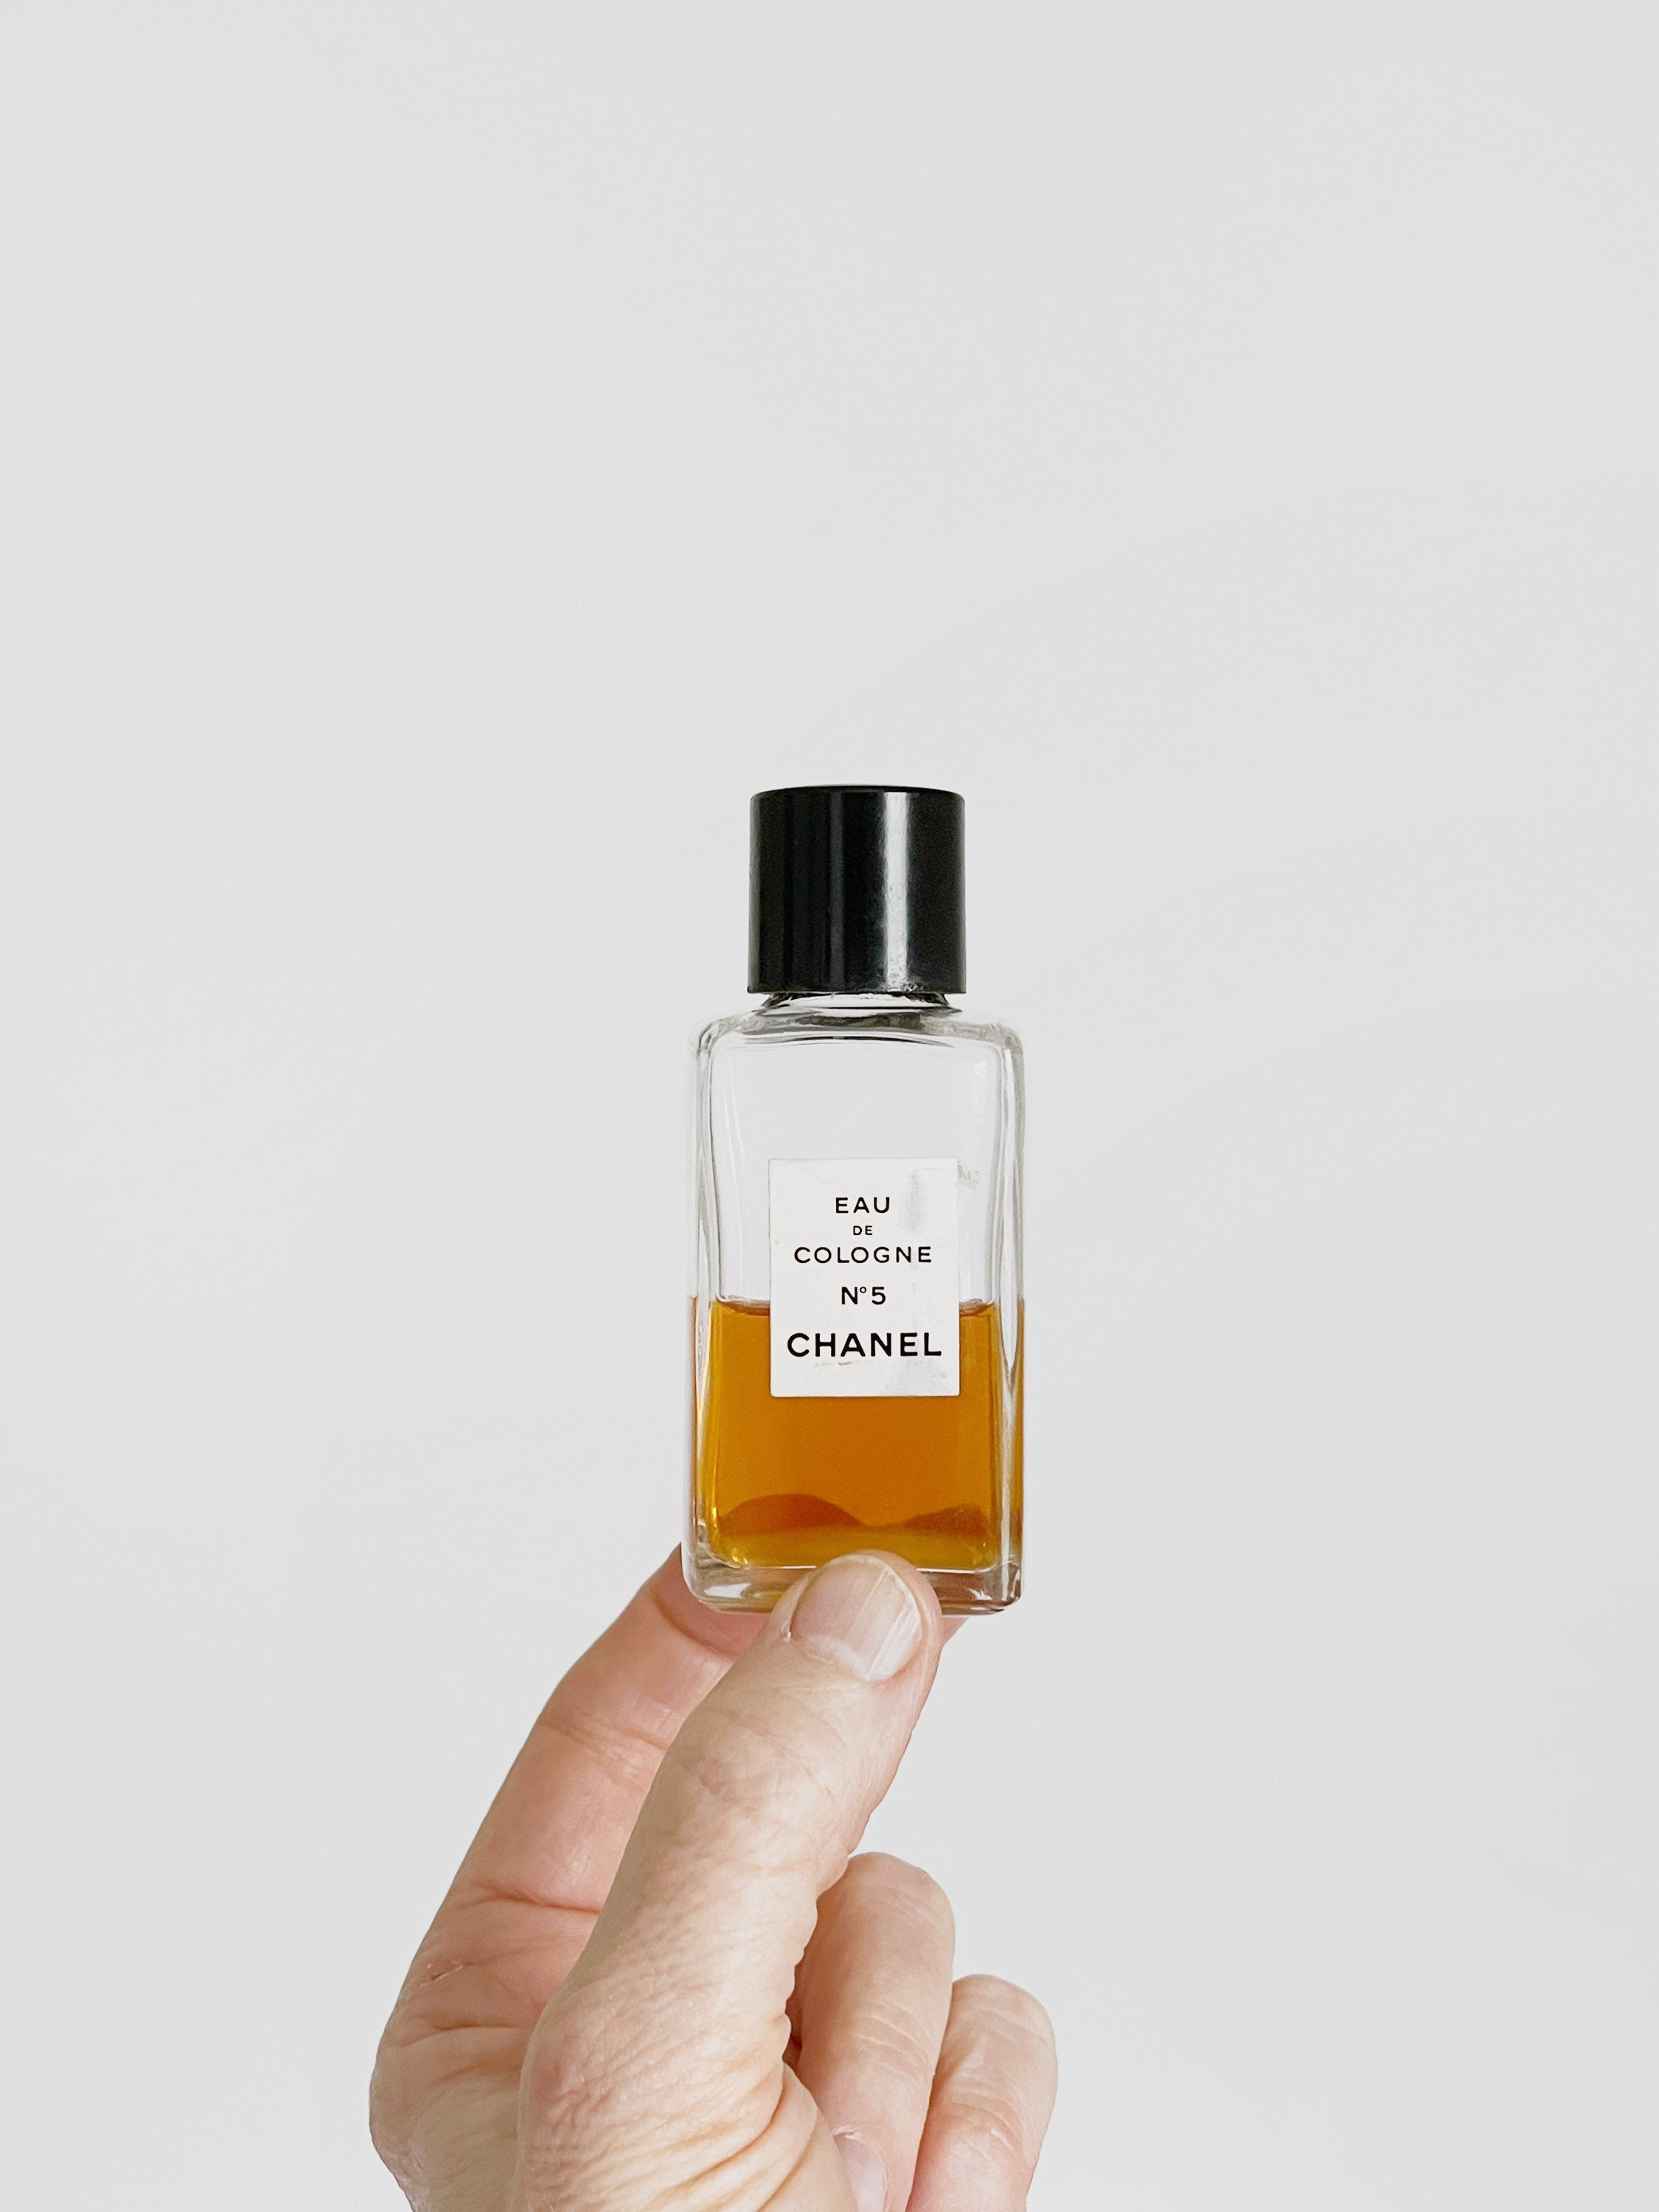 No 5 By Chanel EDP Perfume – Splash Fragrance